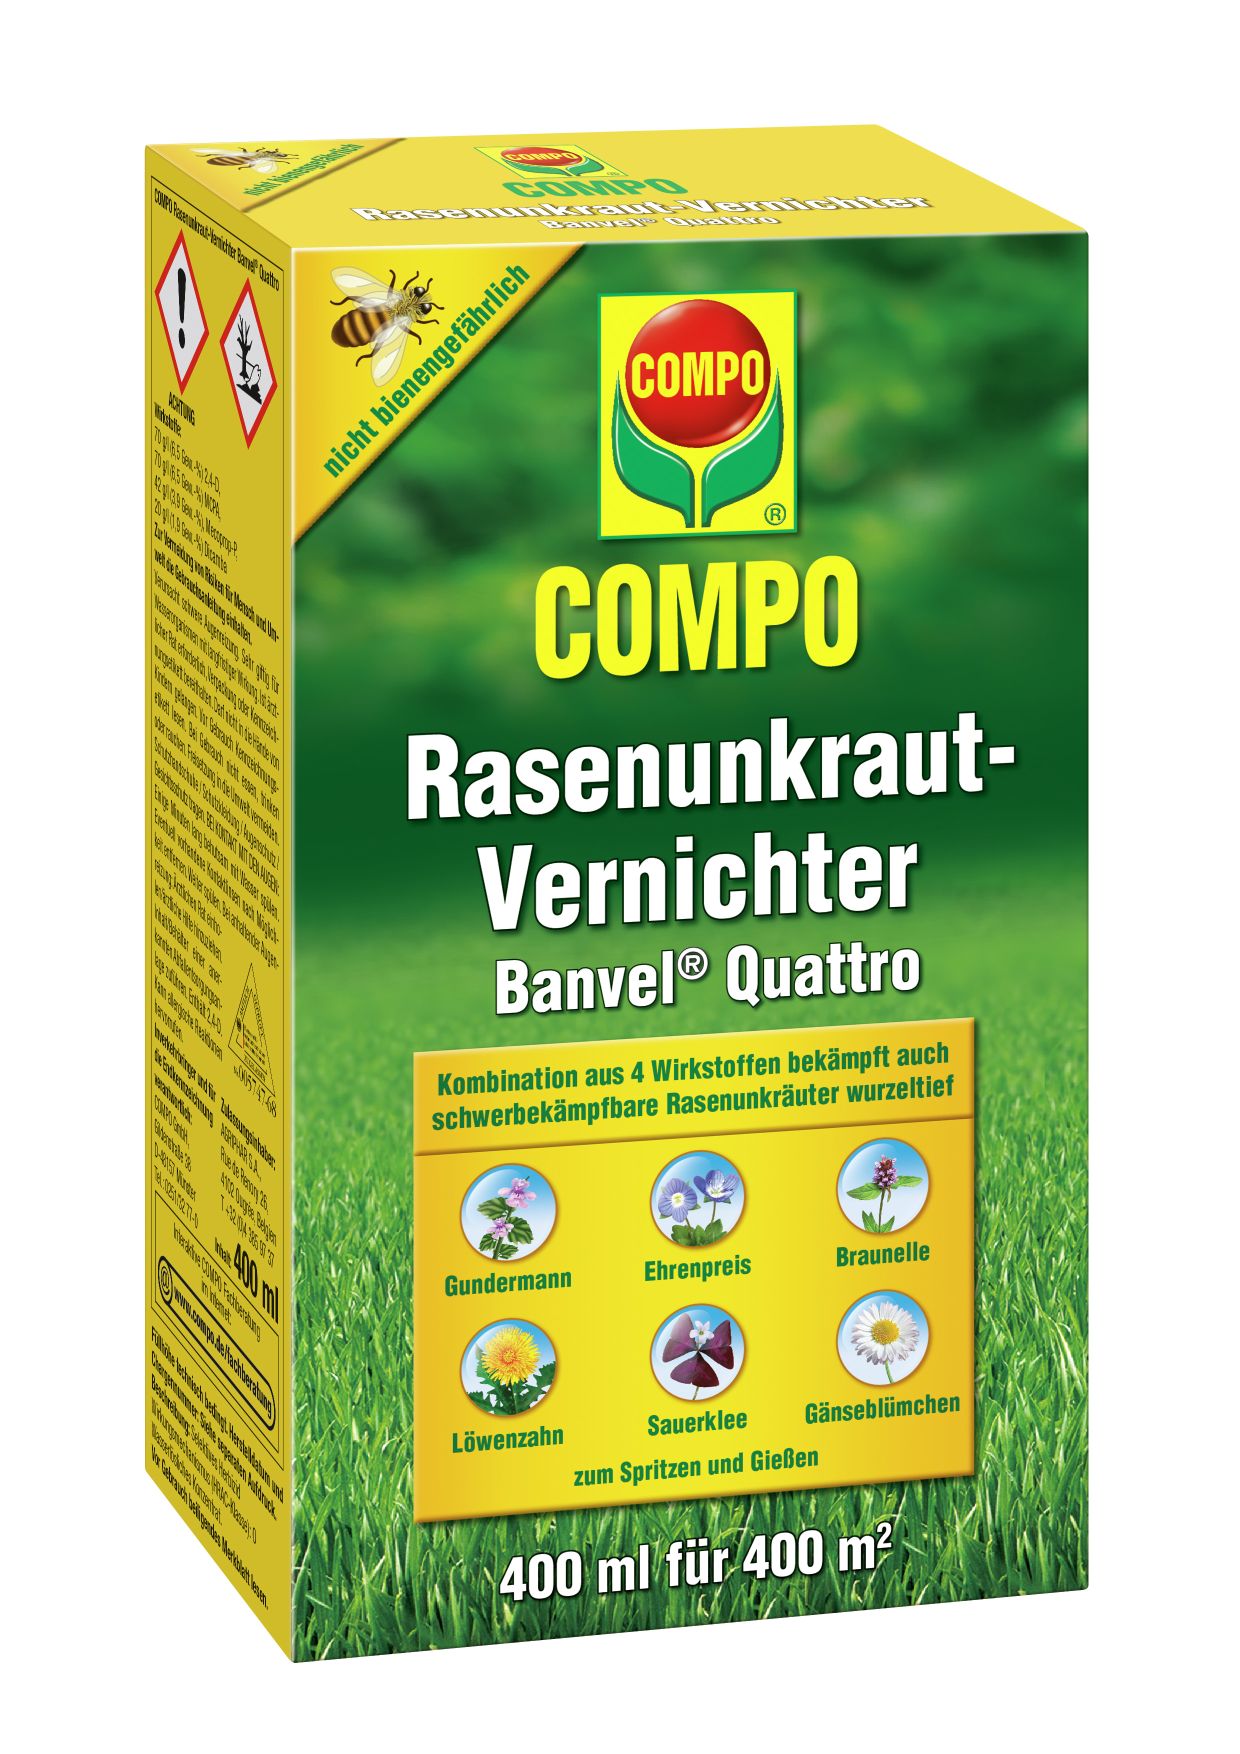 COMPO Rasenunkraut-Vernichter BanvelQuattro - COMPO Rasenunkraut-Vernichter BanvelQuattro